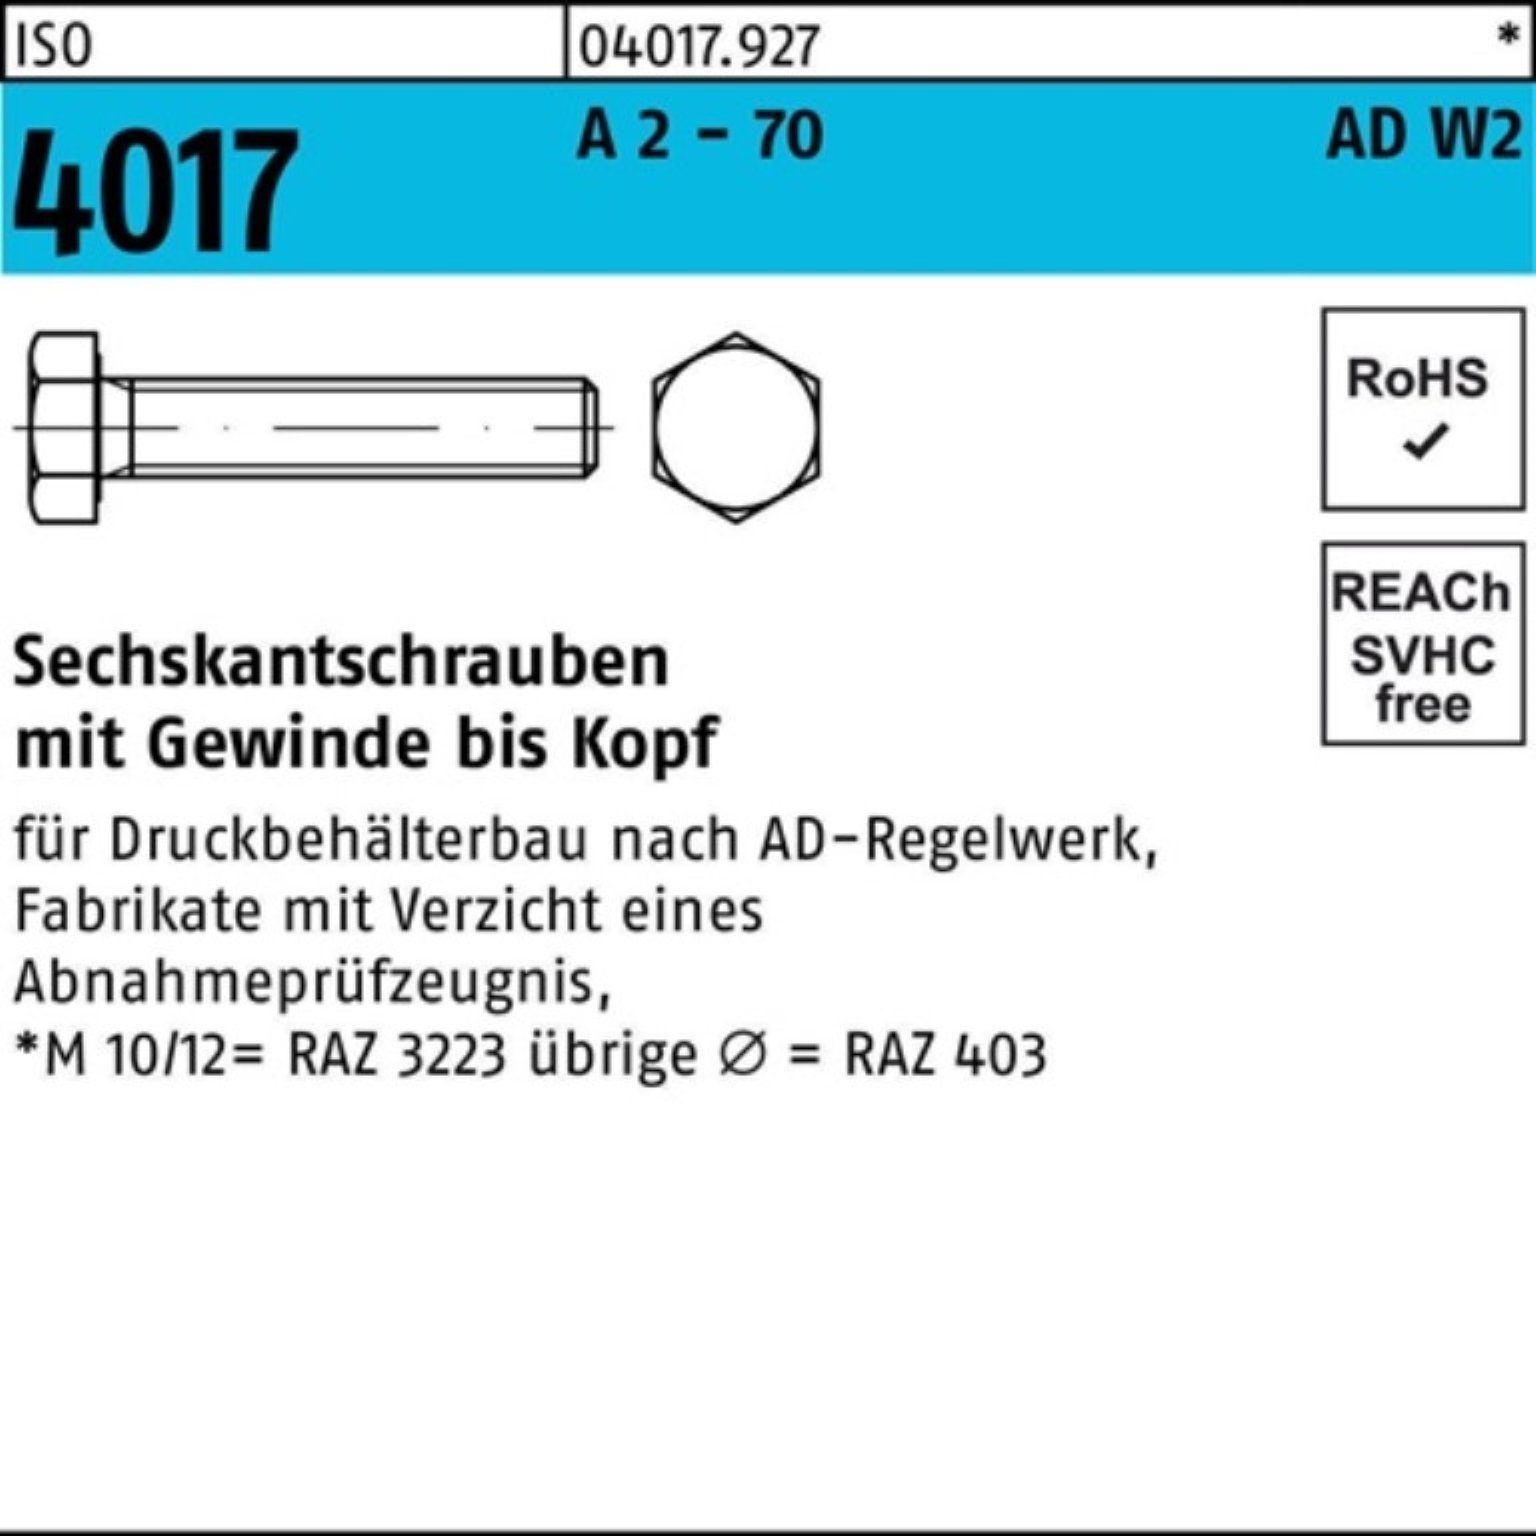 Pack AD-W2 ISO Sechskantschraube Bufab 100 100er St 70 - A 50 Sechskantschraube M10x 4017 2 VG